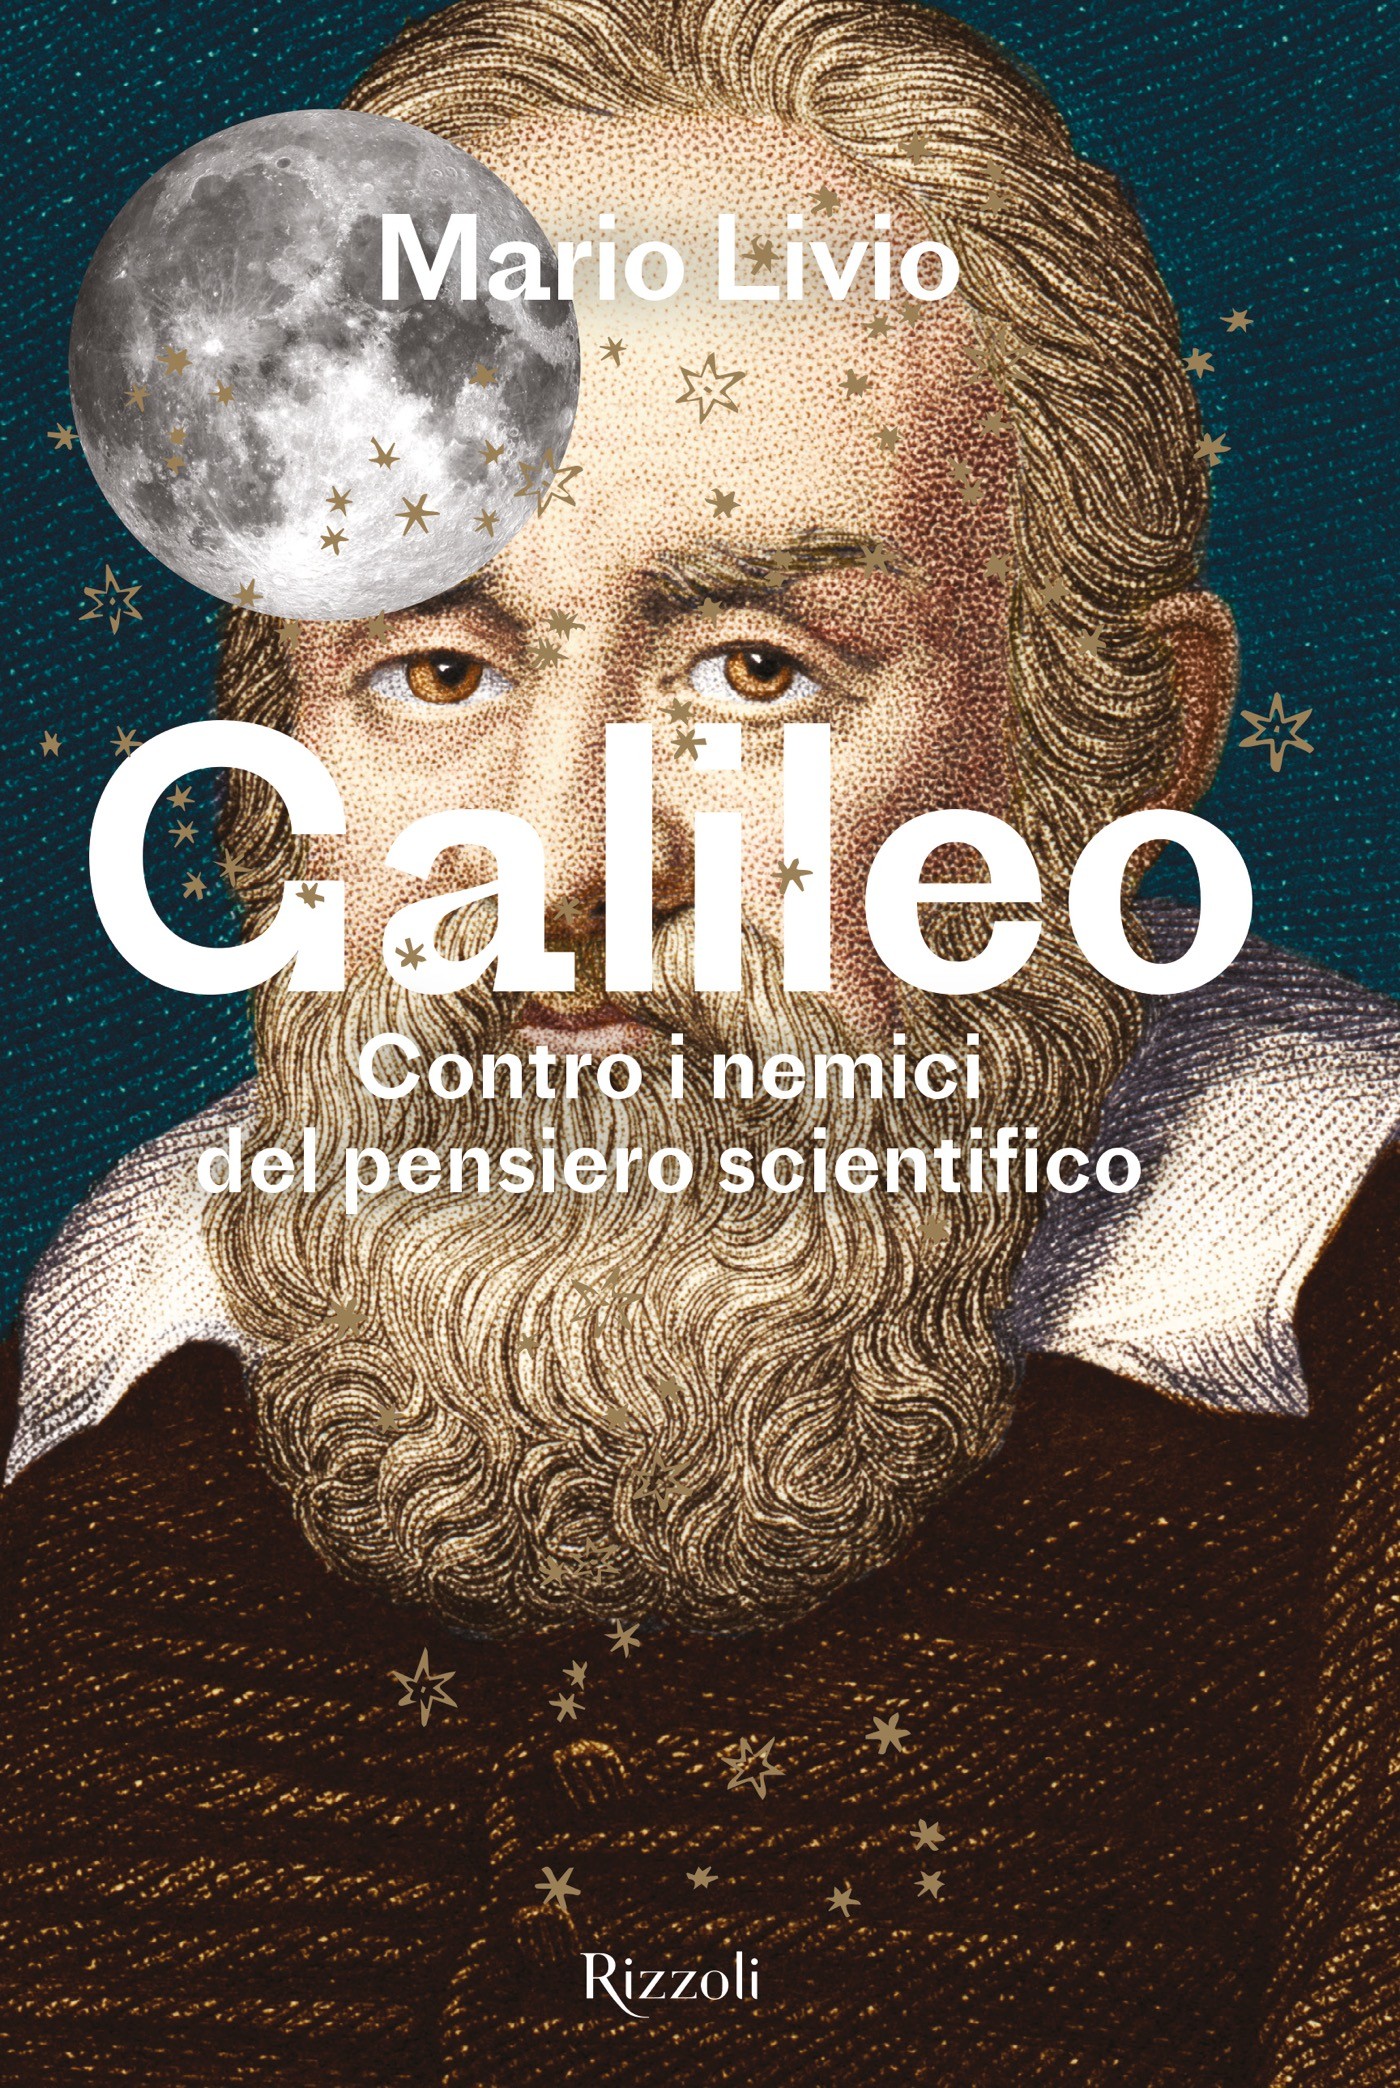 Galileo - Librerie.coop